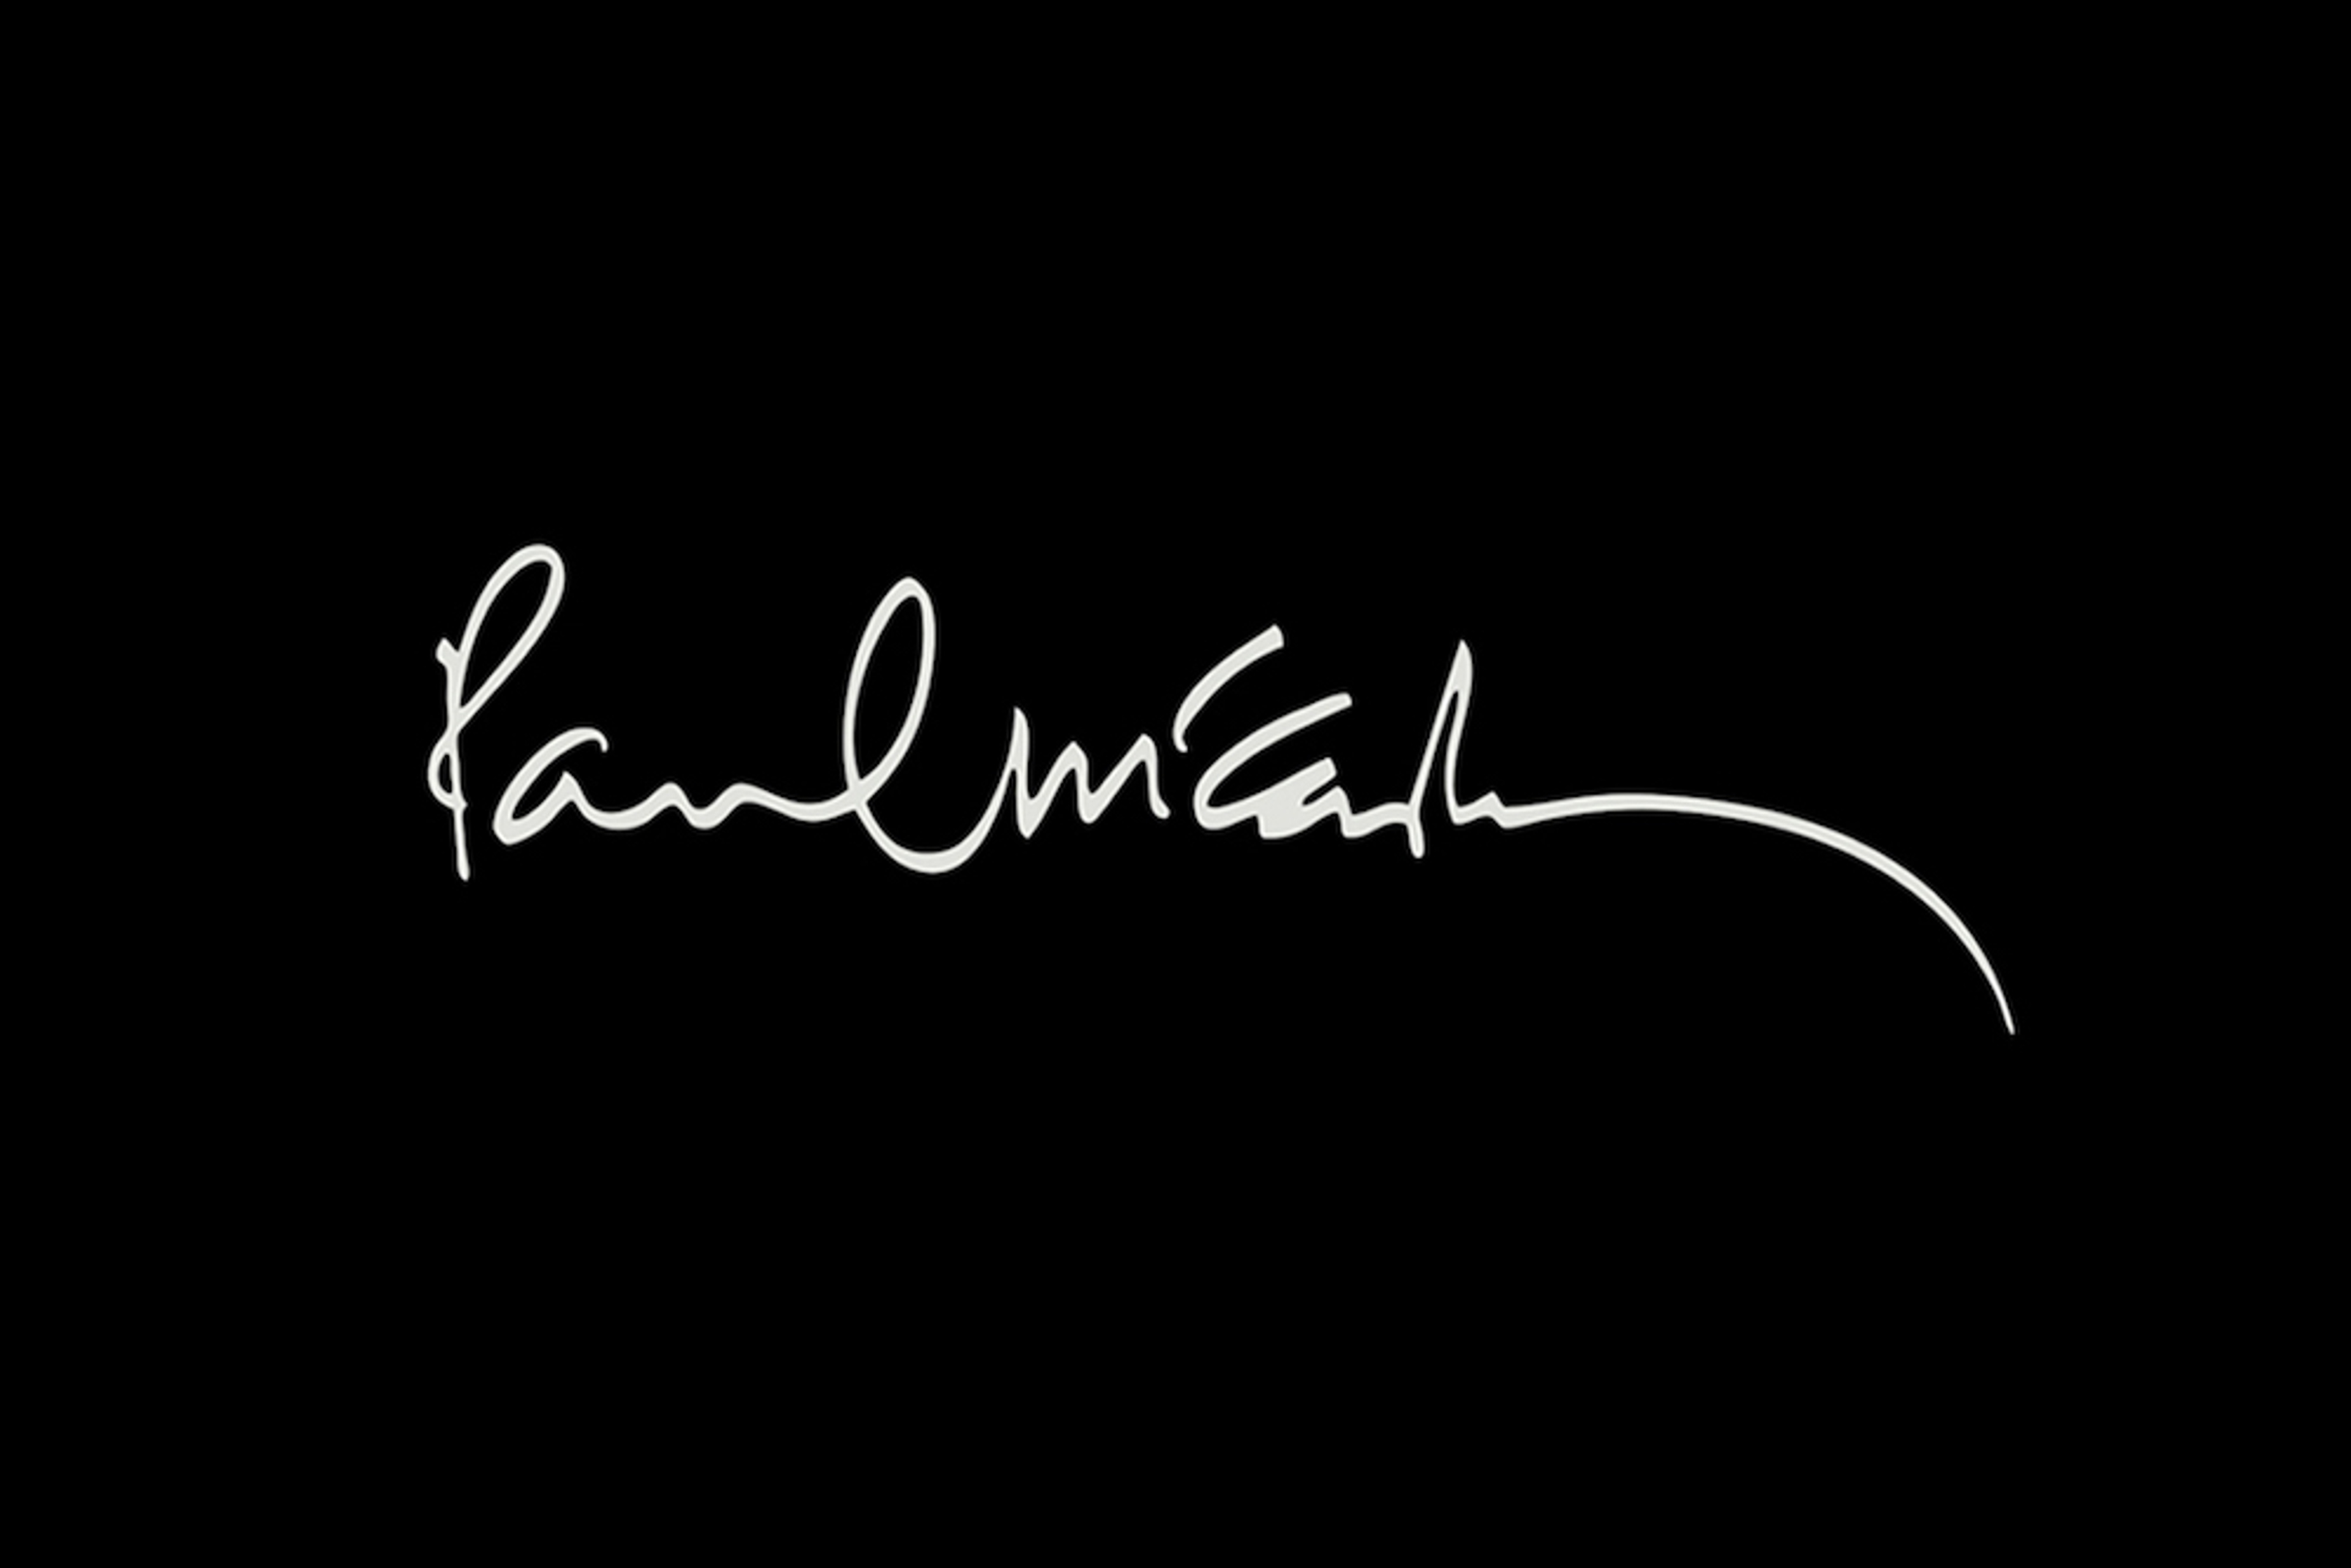 Paul McCartney's signature